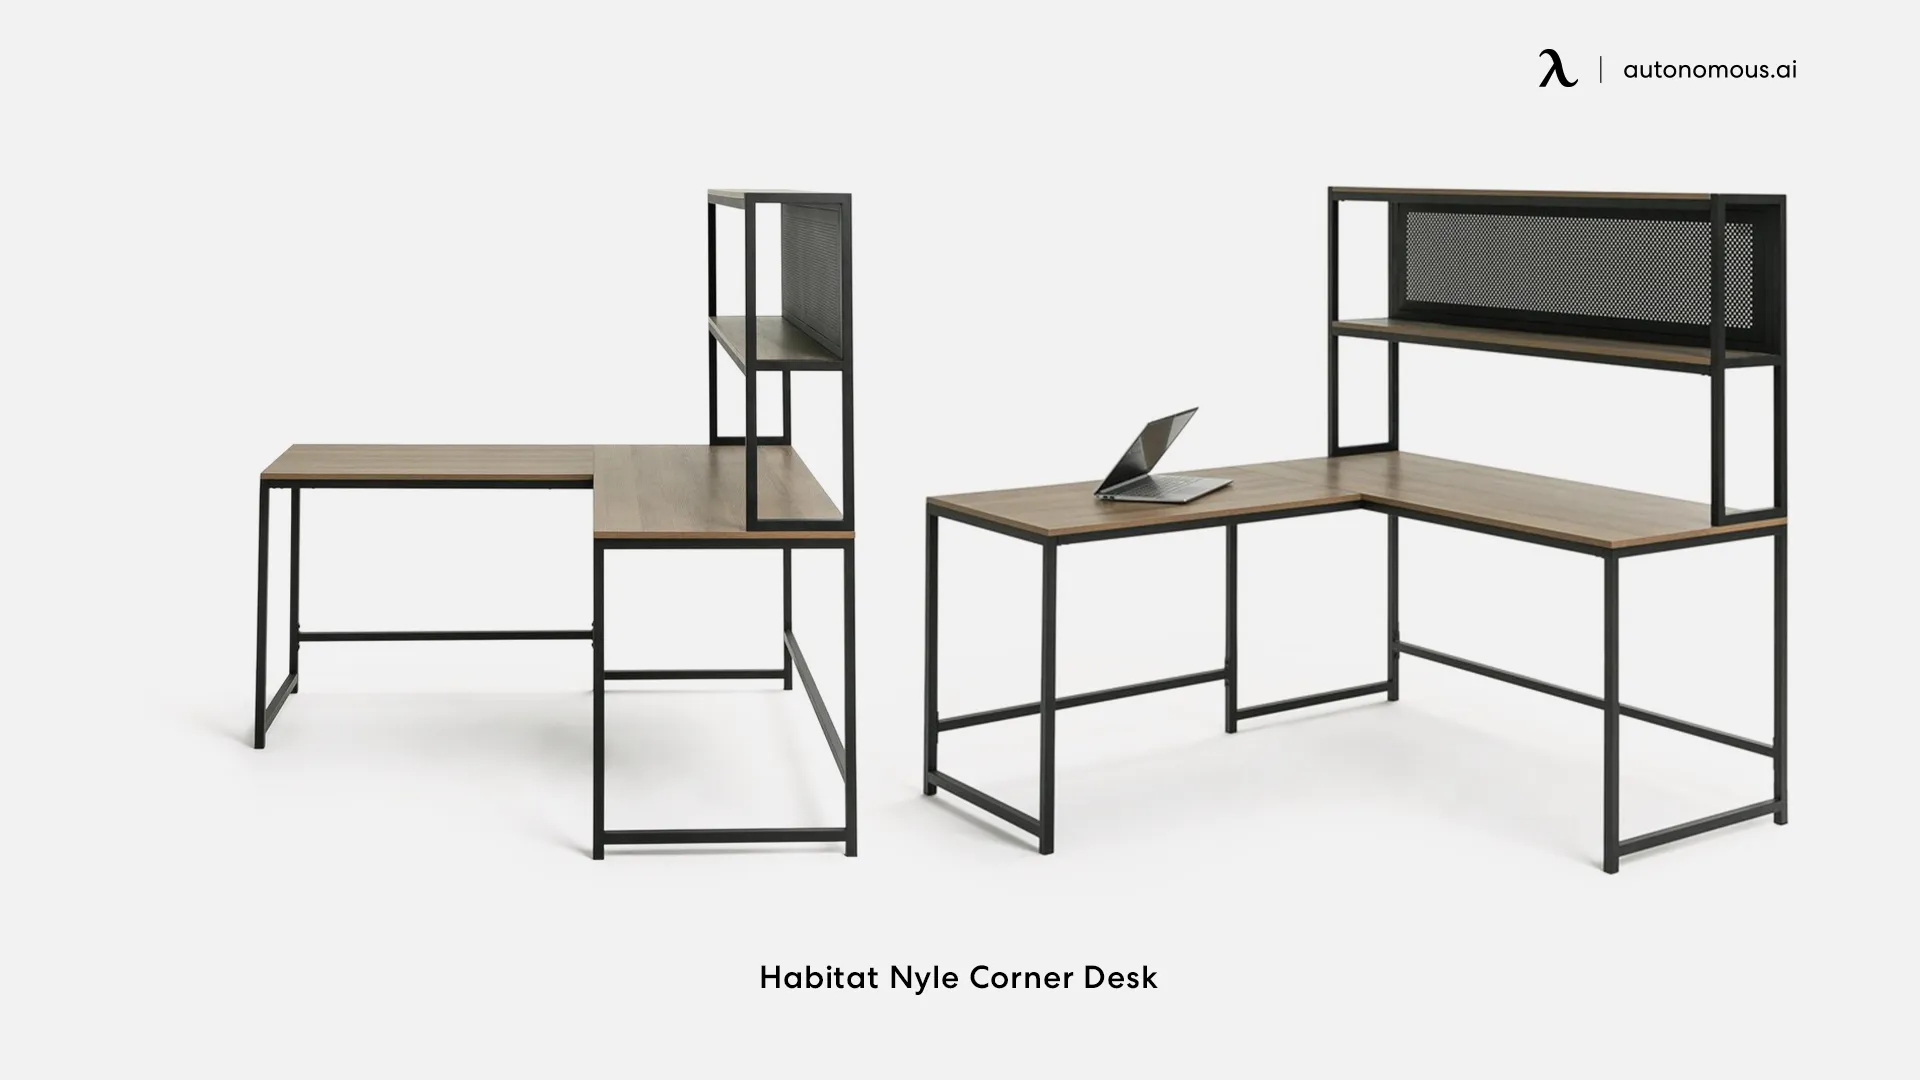 Habitat Nyle Corner Desk